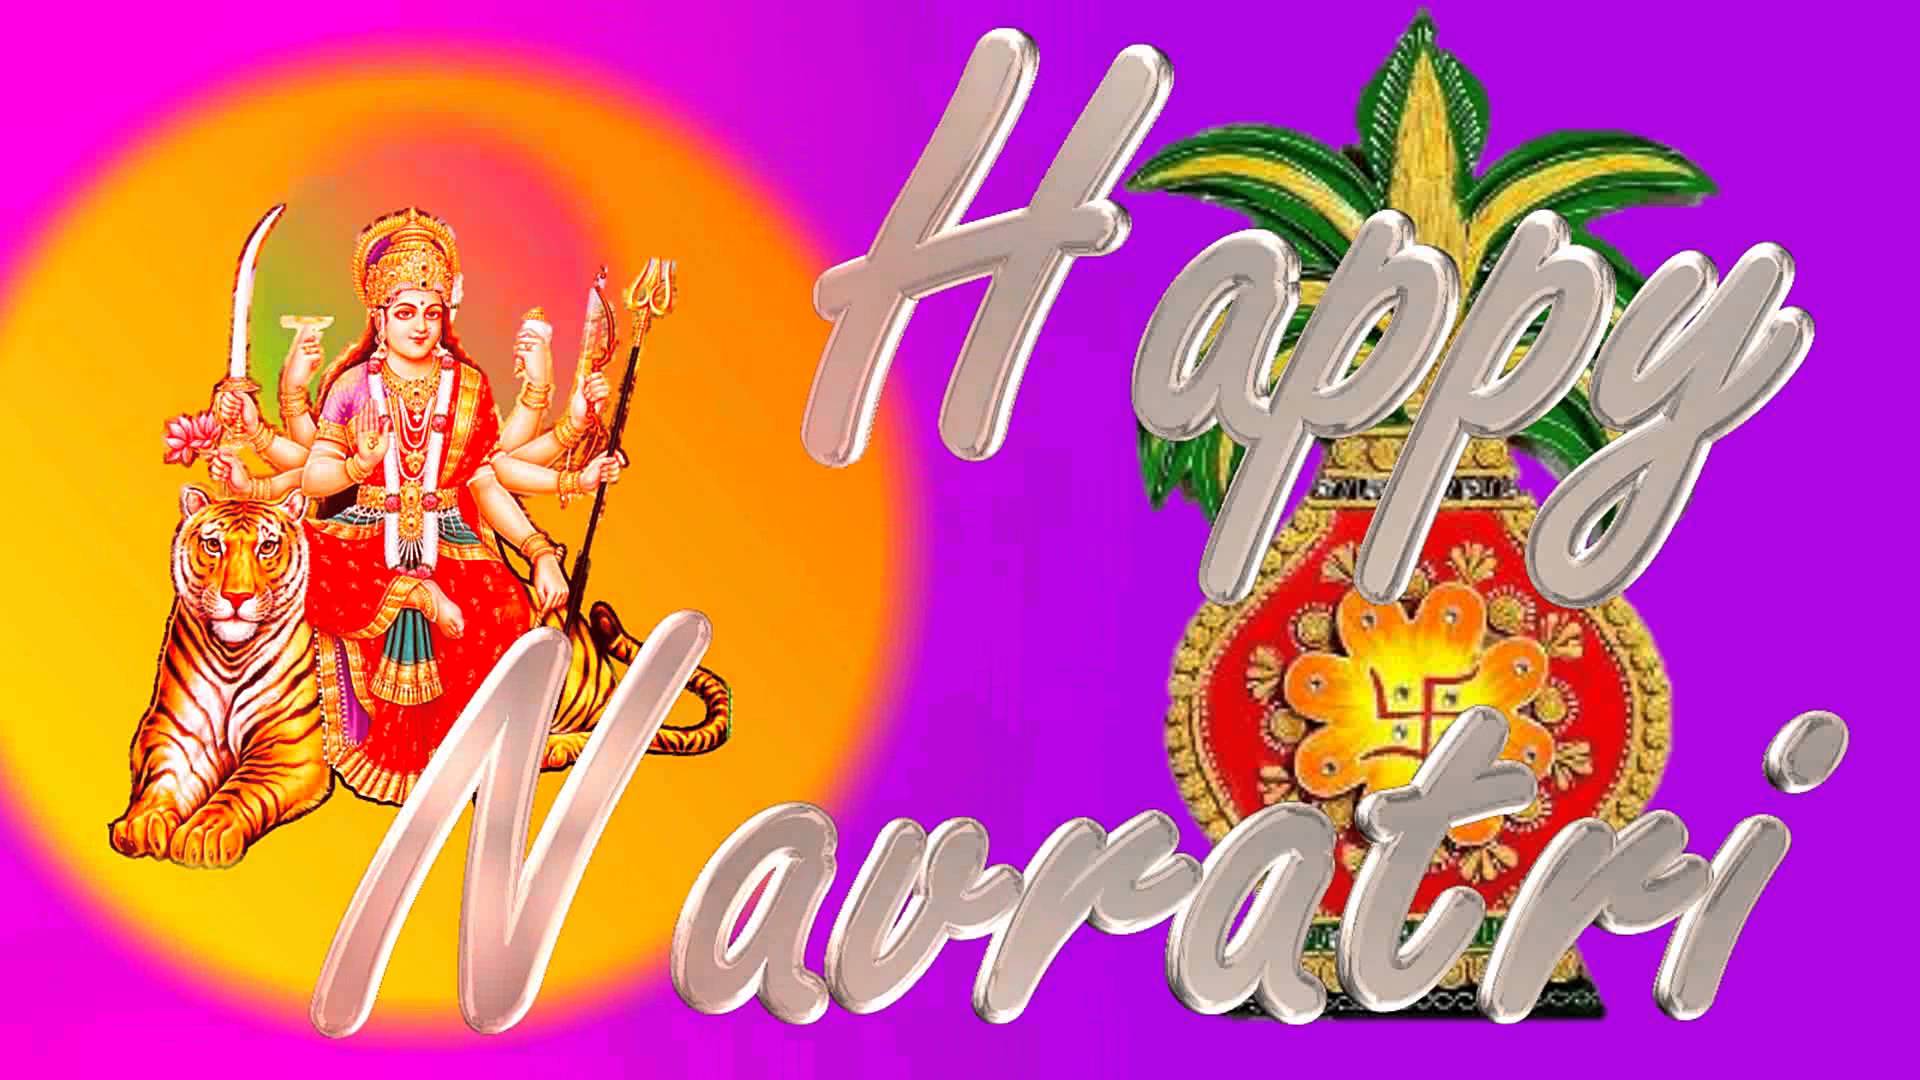 Chaitra Navratri Festival Whatsapp Dp Image Picture Wallpaper